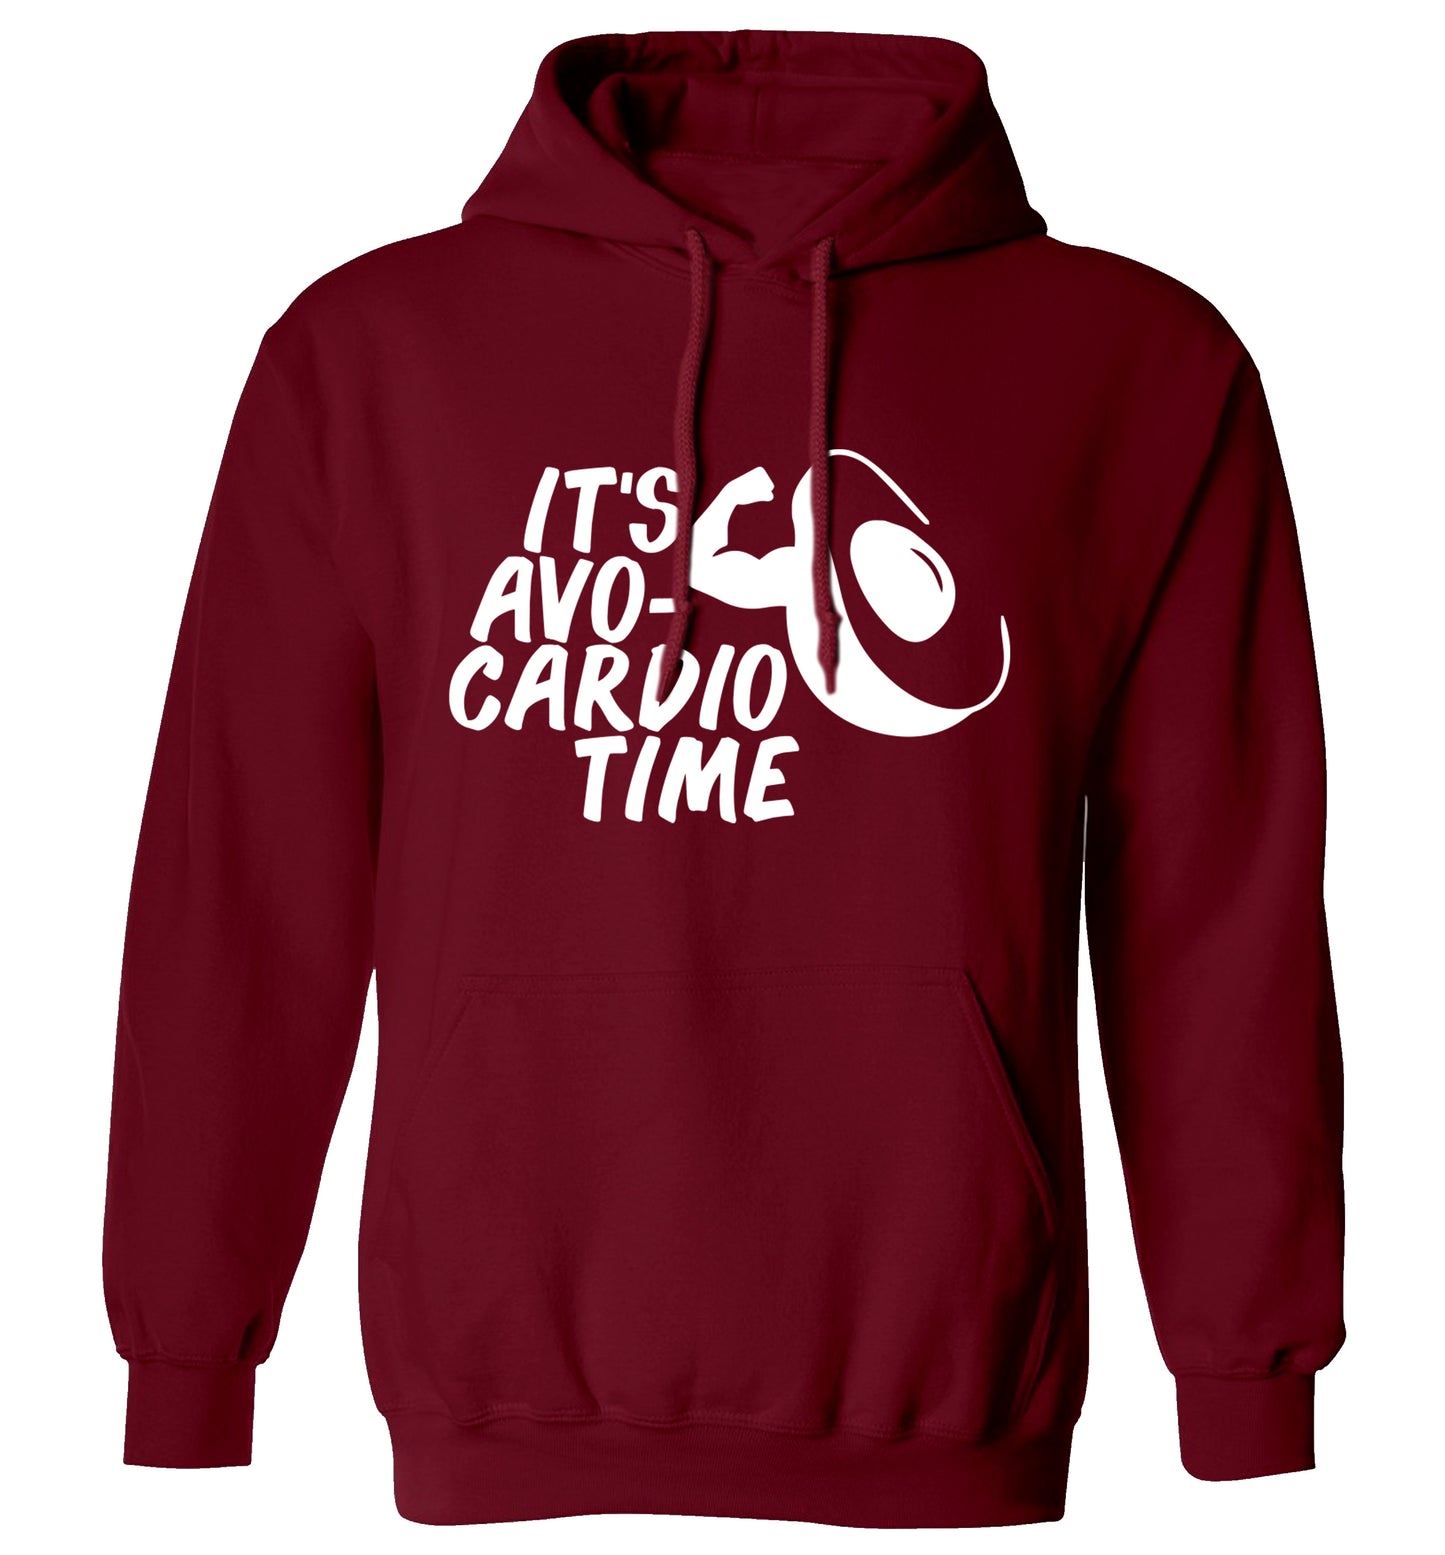 It's avo-cardio time adults unisex maroon hoodie 2XL